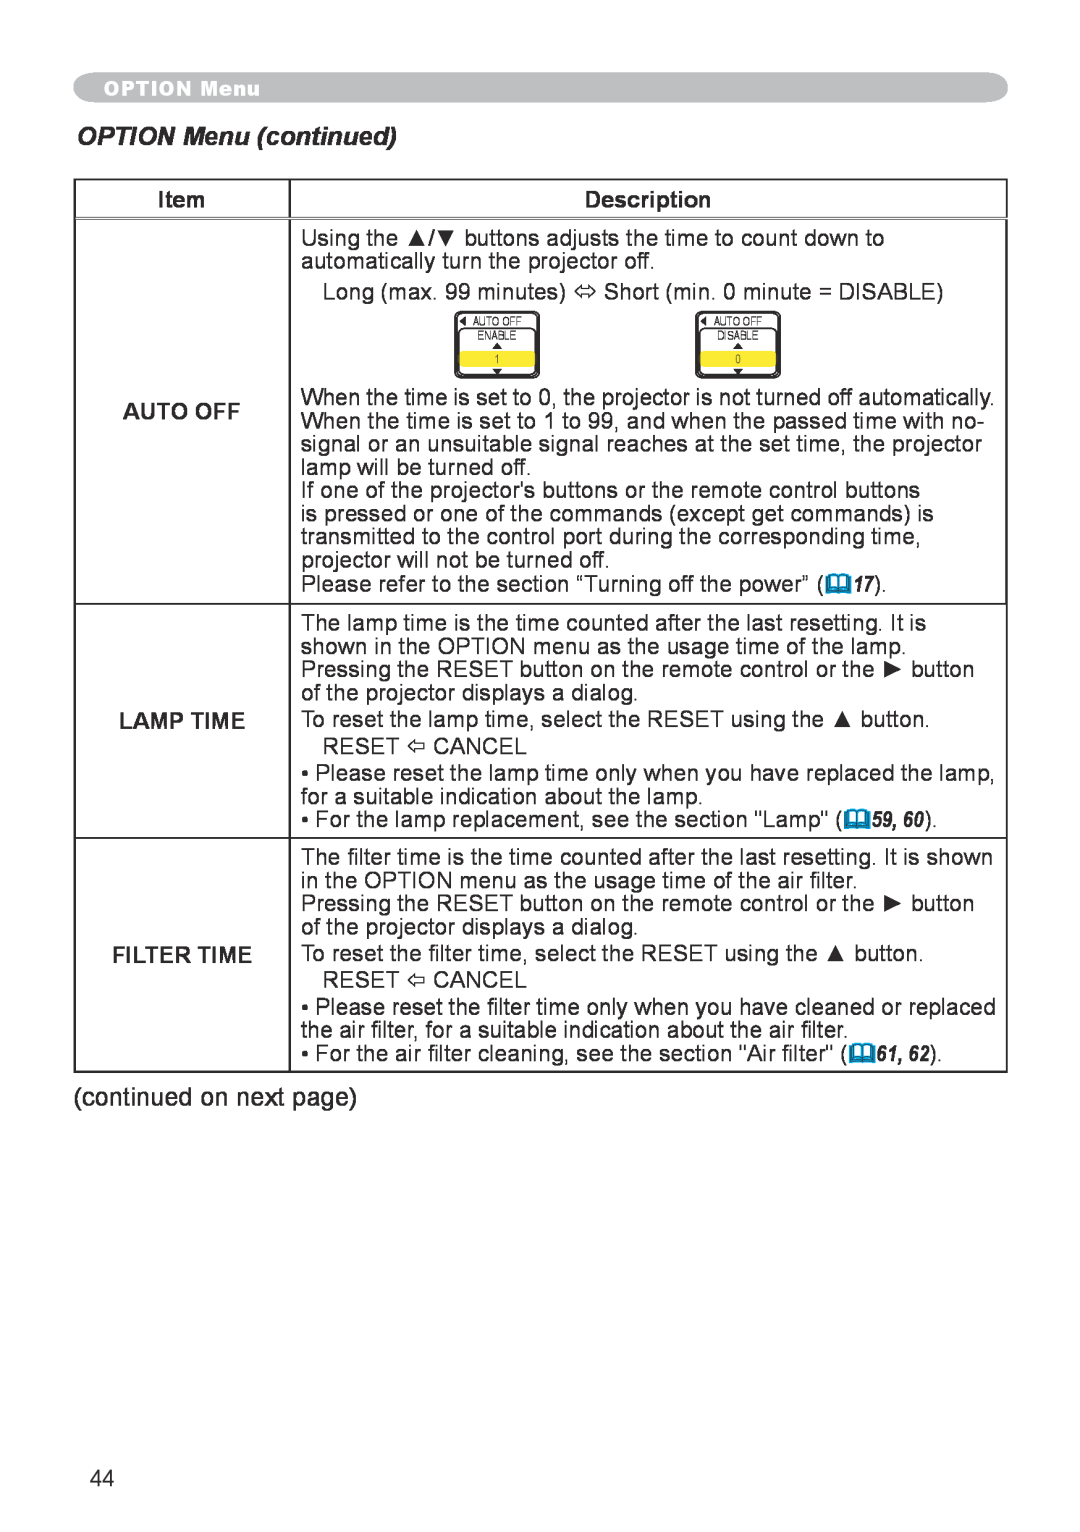 Hitachi CP-X608 user manual OPTION Menu continued, Description, Auto Off, Lamp Time, Filter Time 